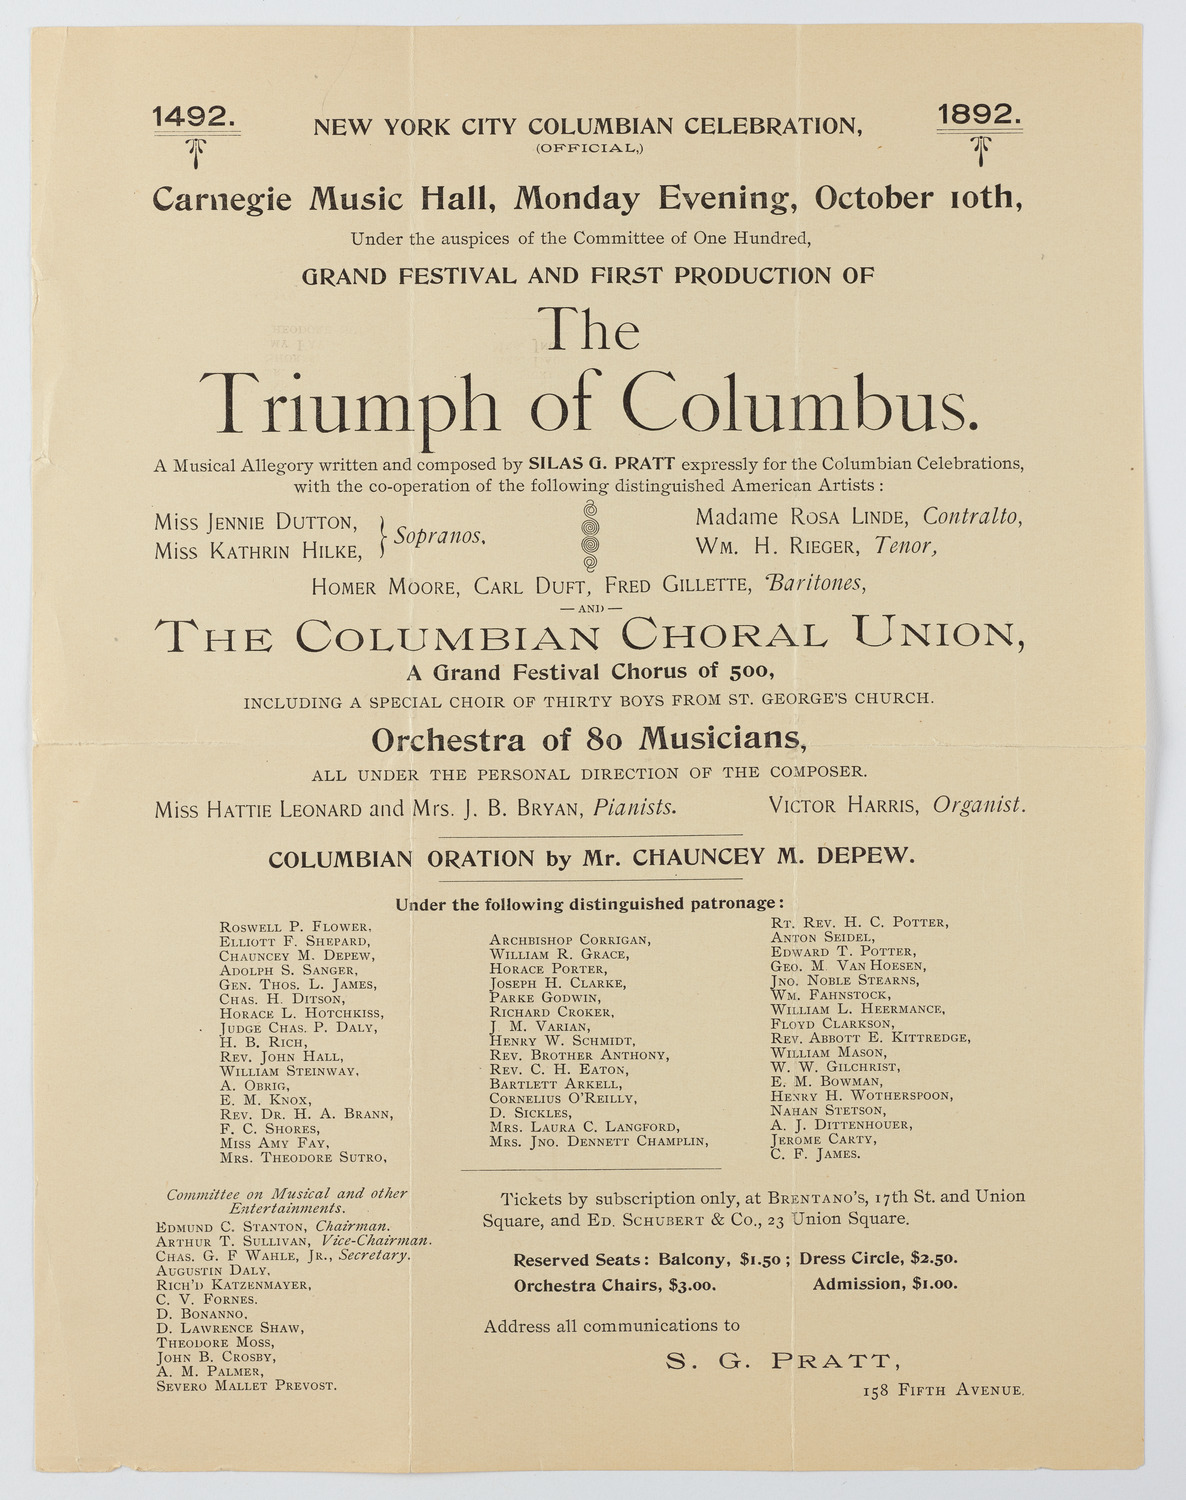 New York Columbian Celebration, October 10, 1892